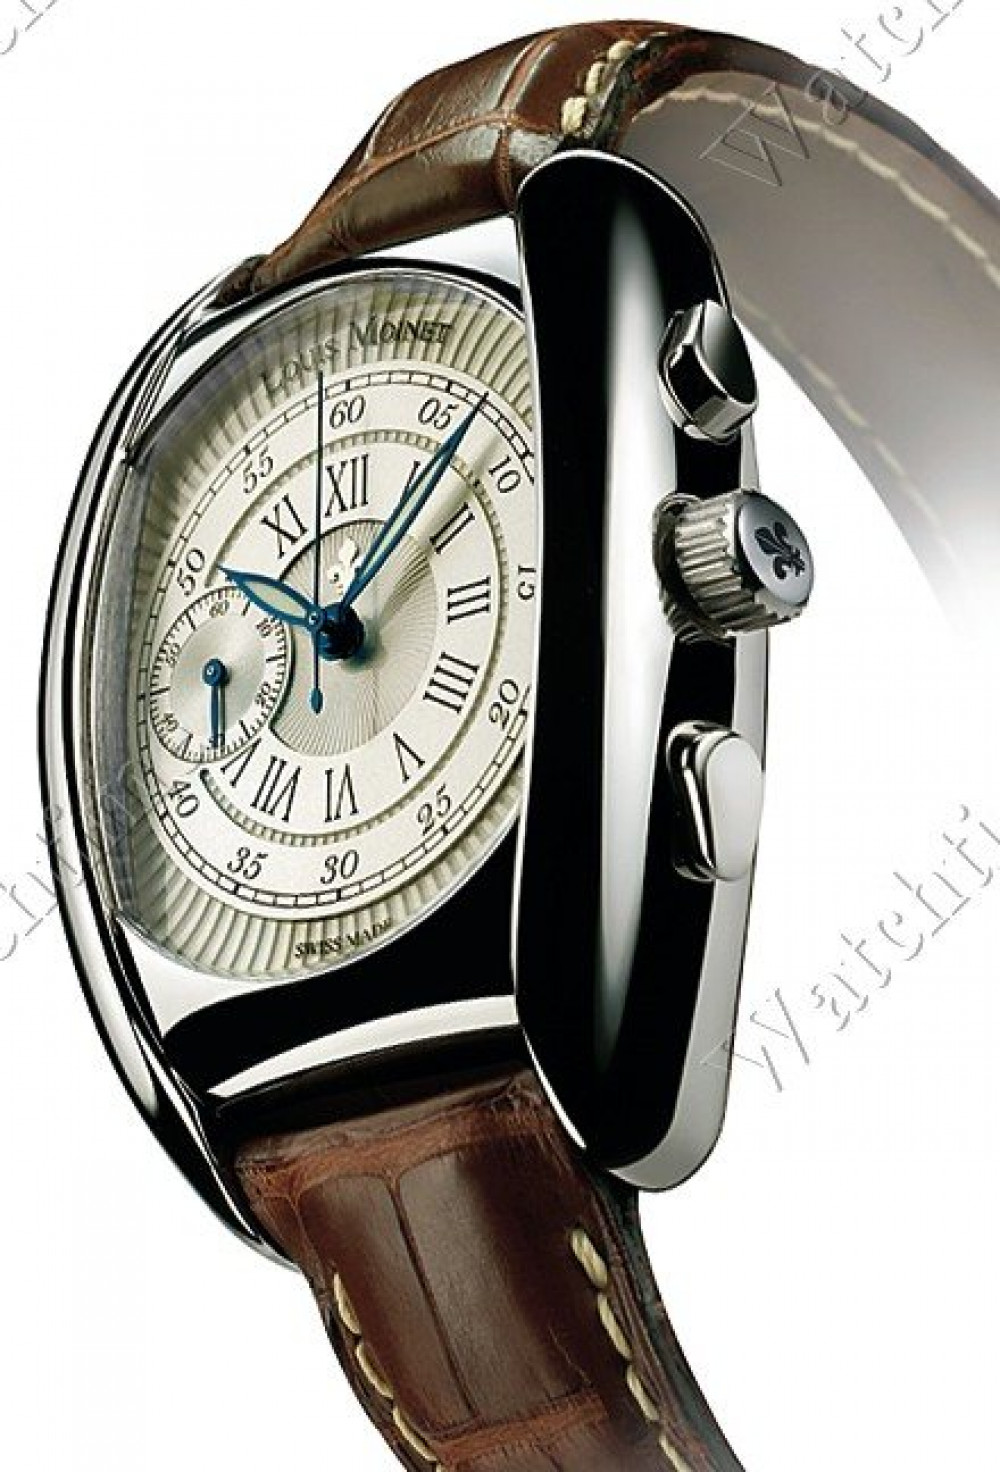 Zegarek firmy Louis Moinet, model Chronovintage